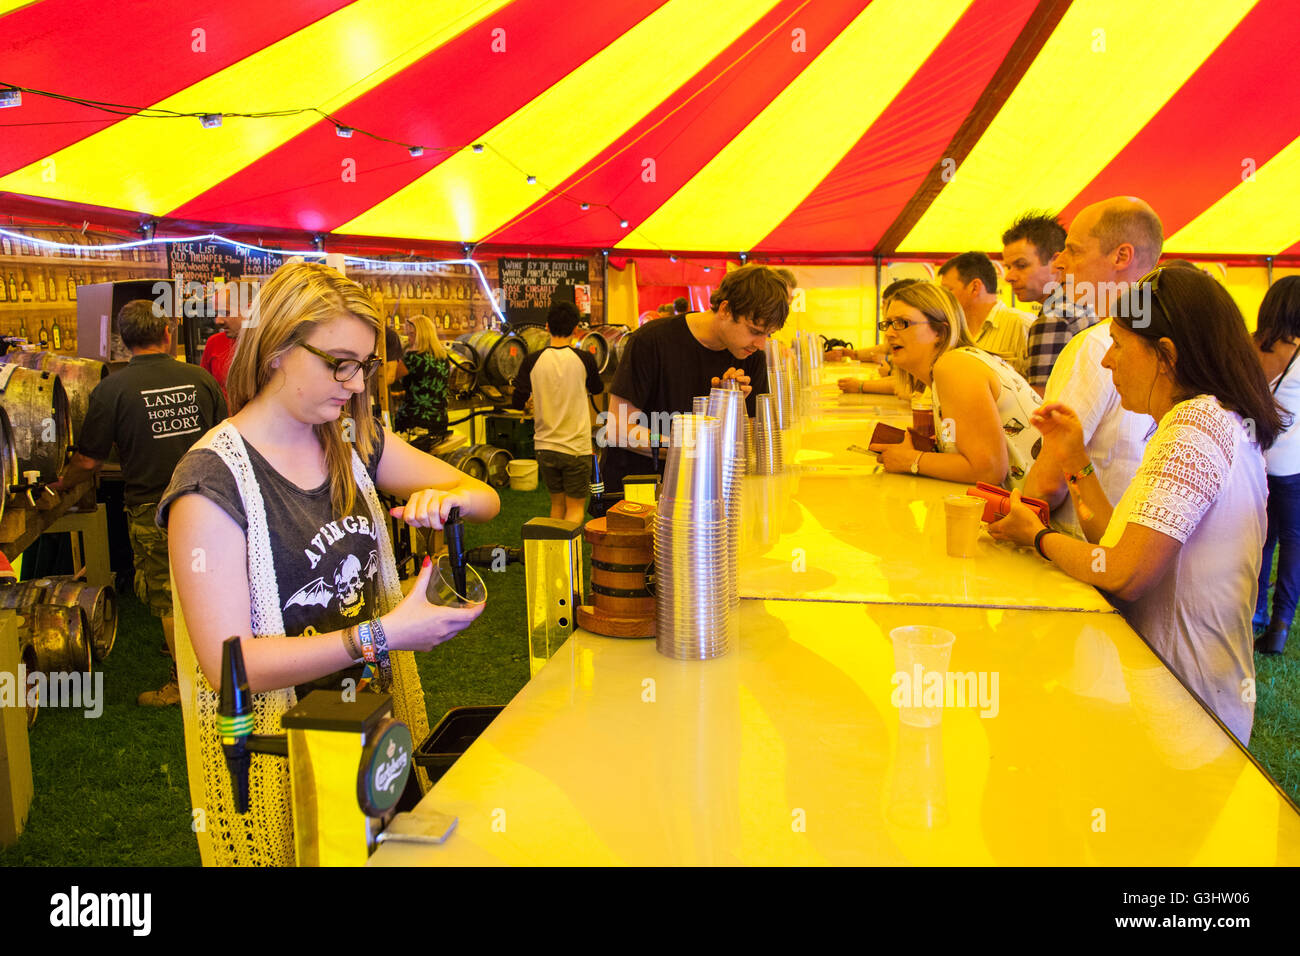 The bar at the Alresford music festival 2016, Alresford, Hampshire, England, United Kingdom. Stock Photo